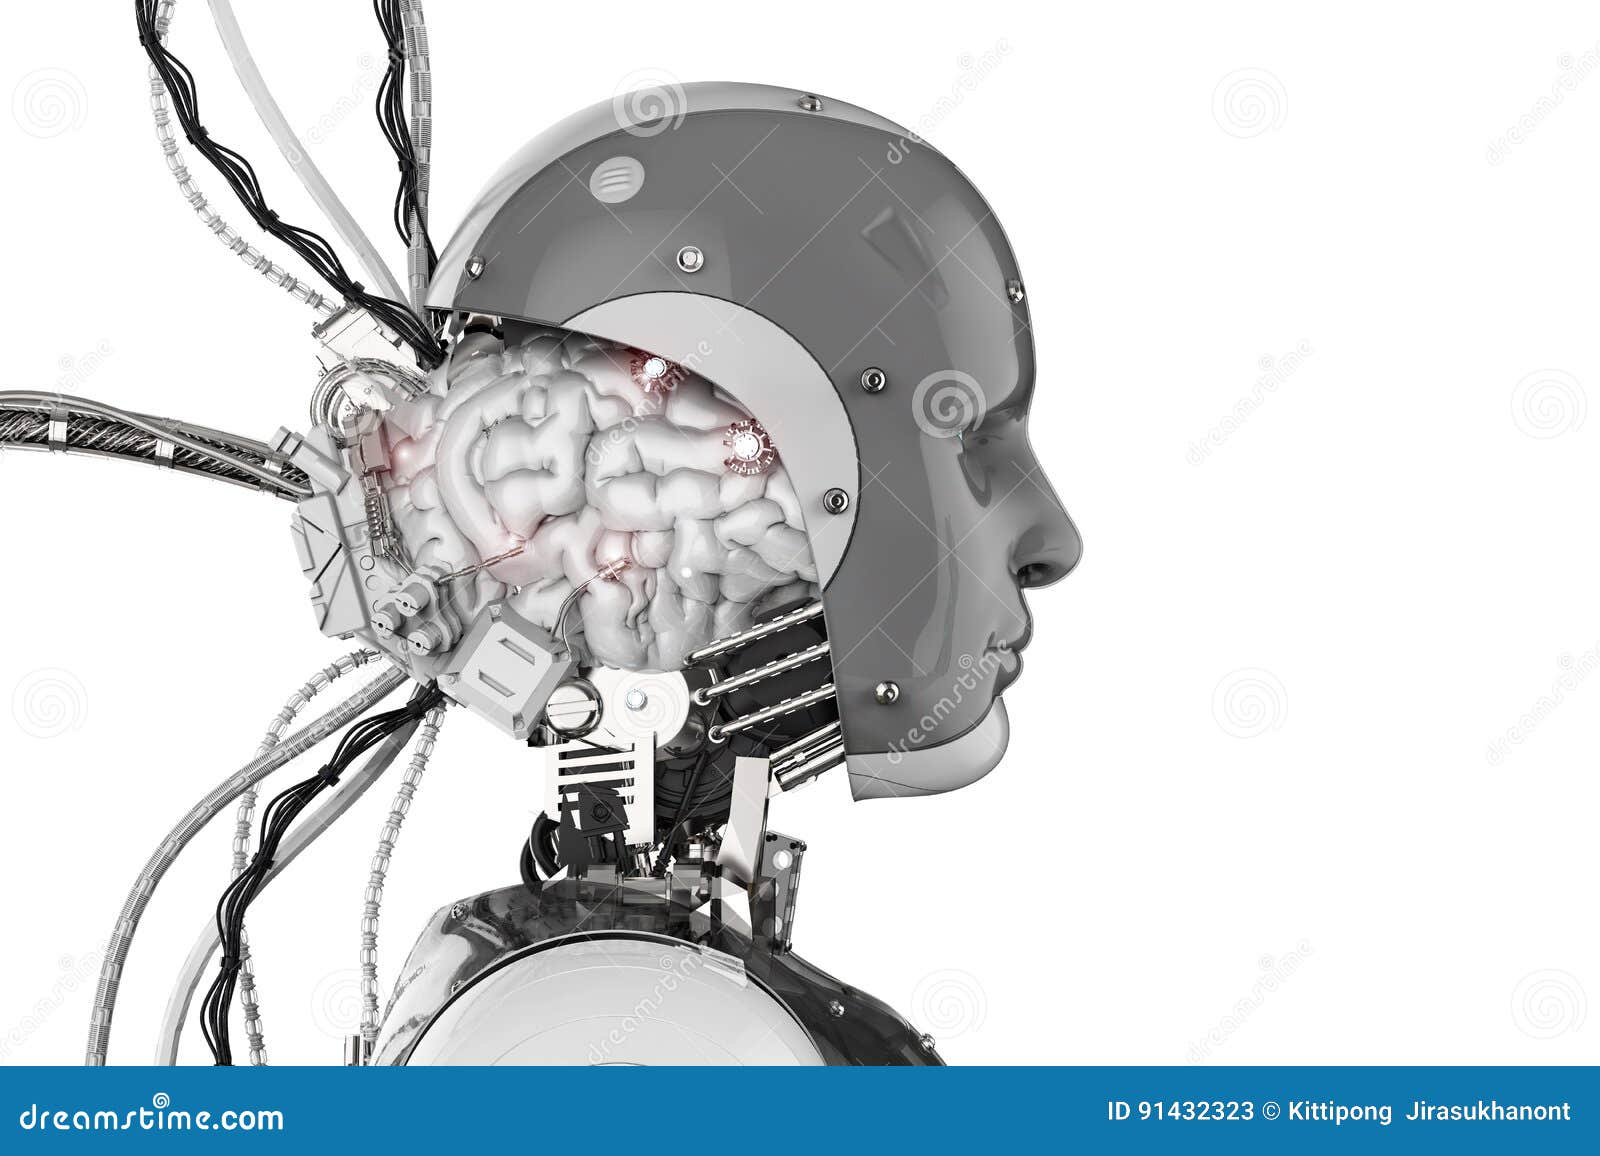 Robot brains. Мозг робота. Позитронный мозг робота. Робот с мозгами. Робот внутри.